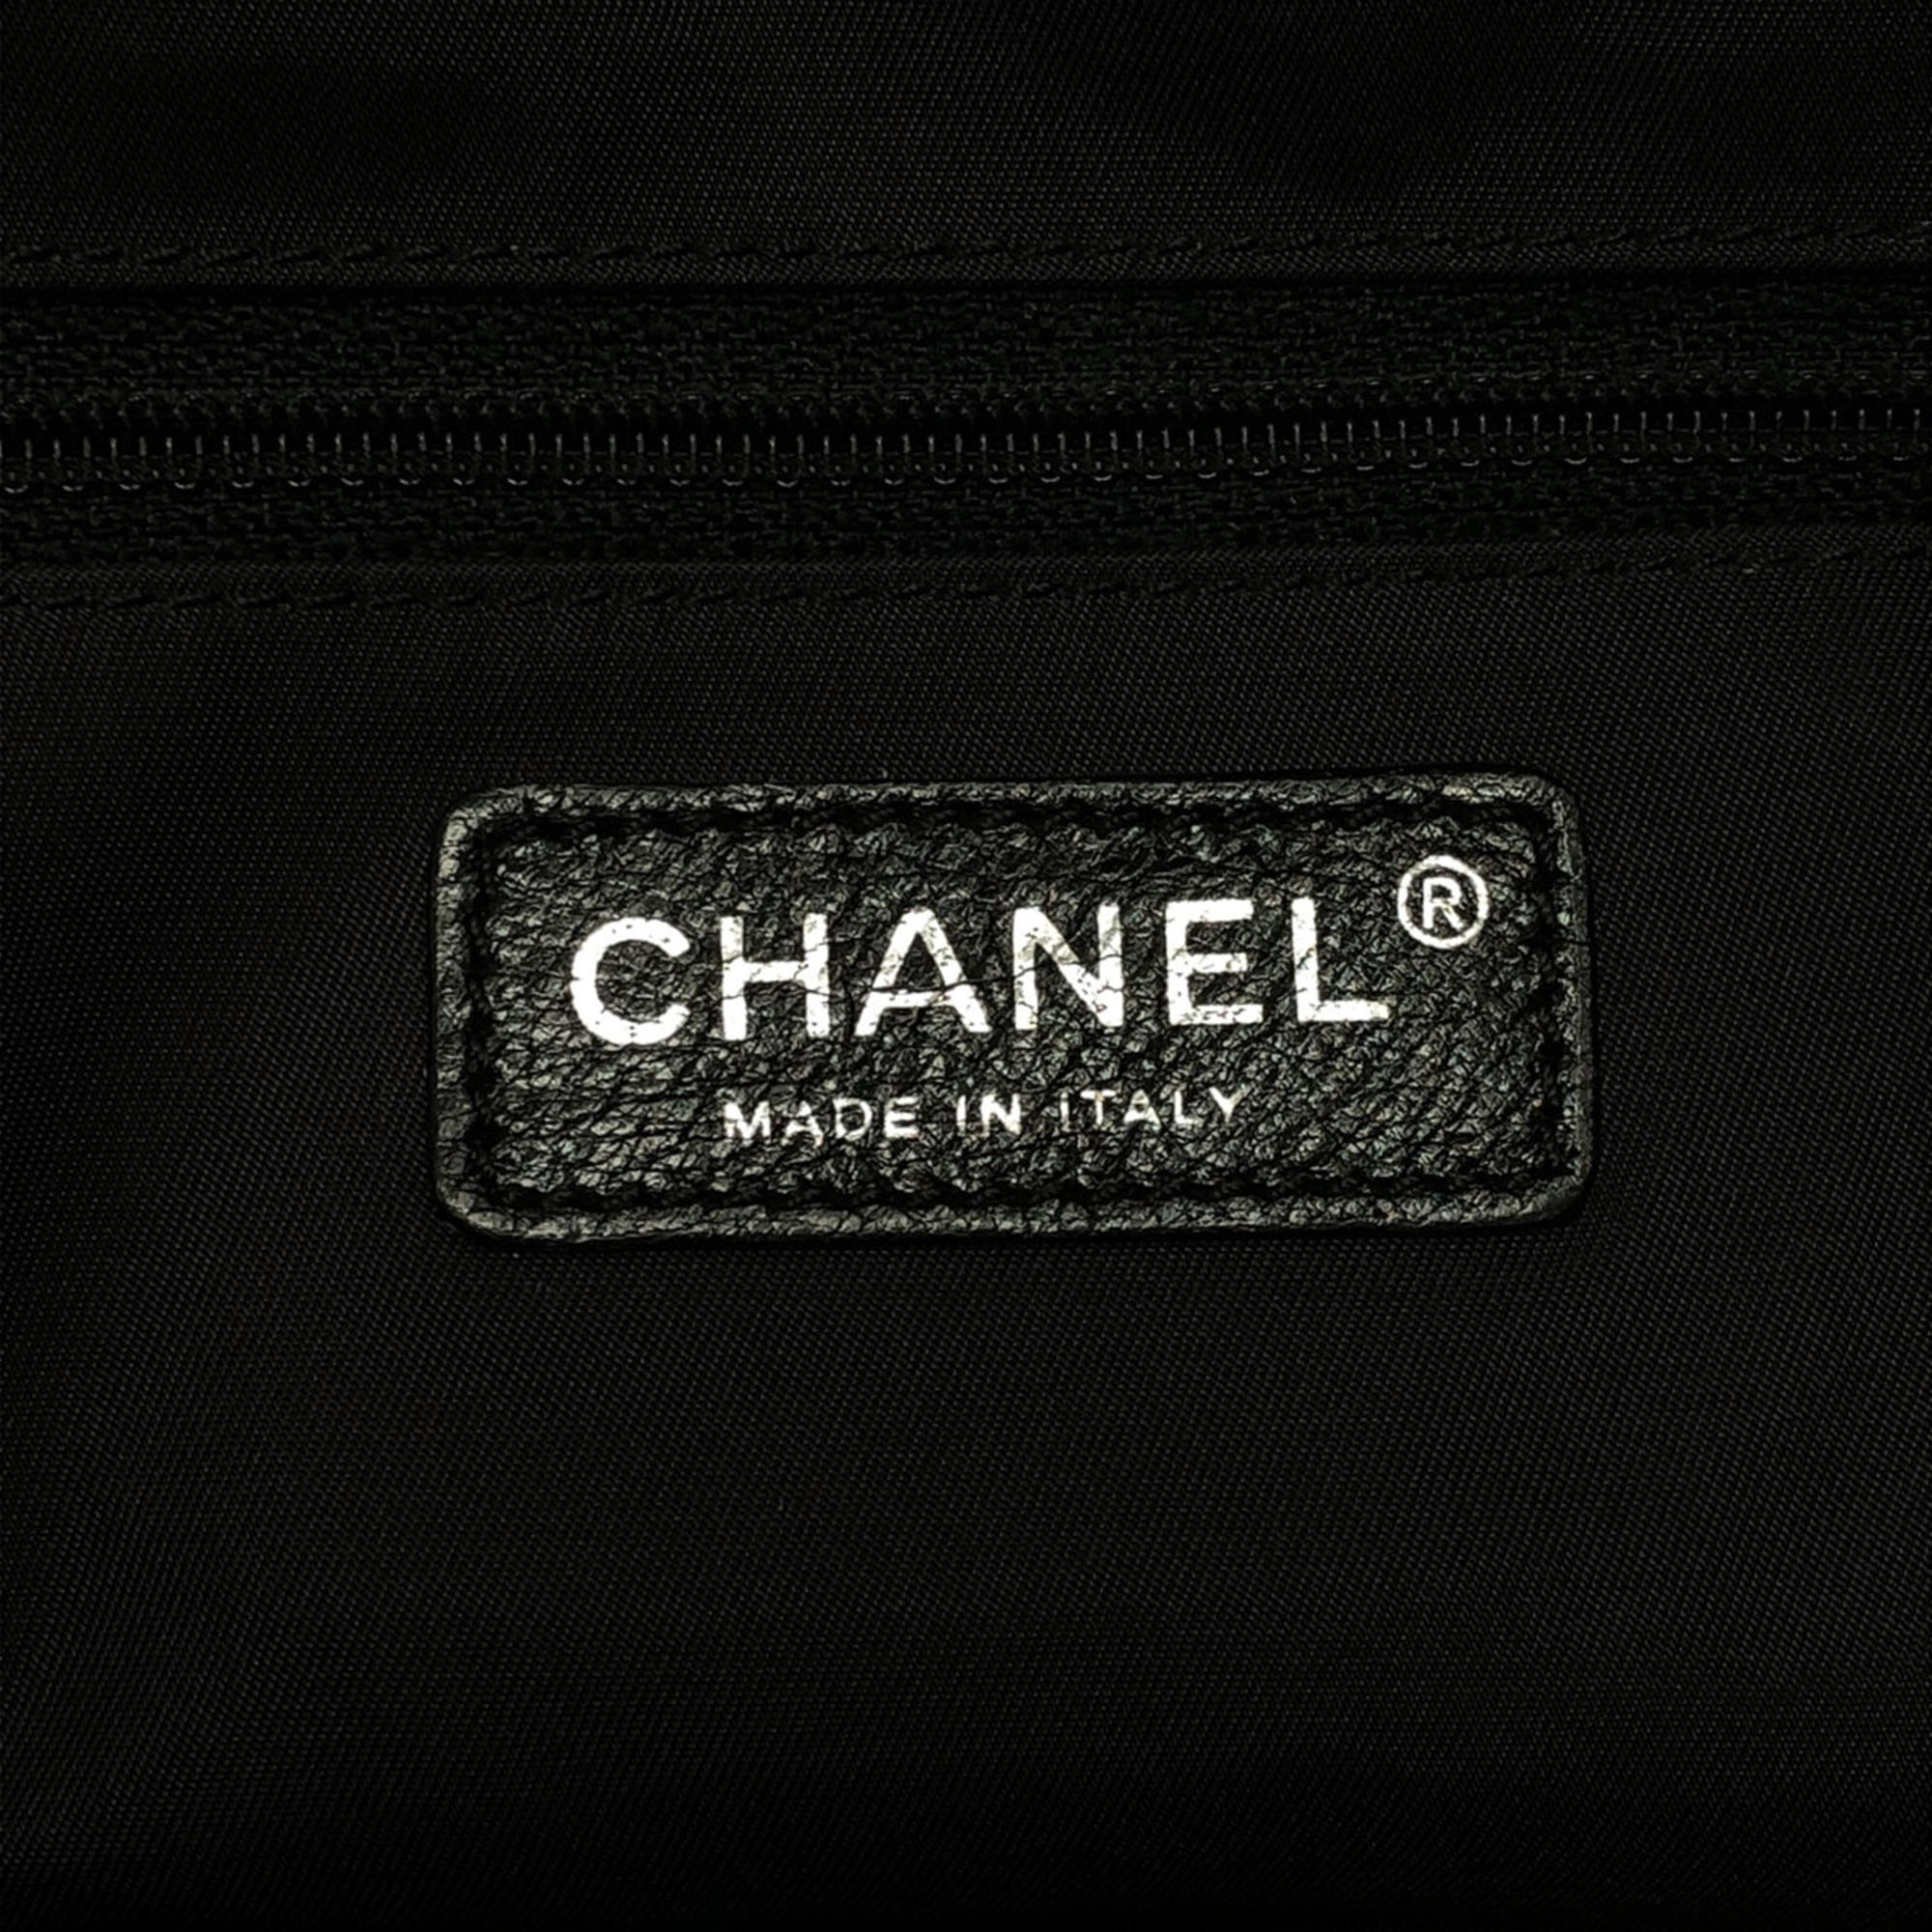 Chanel Black Leather Paris Biarritz Tote